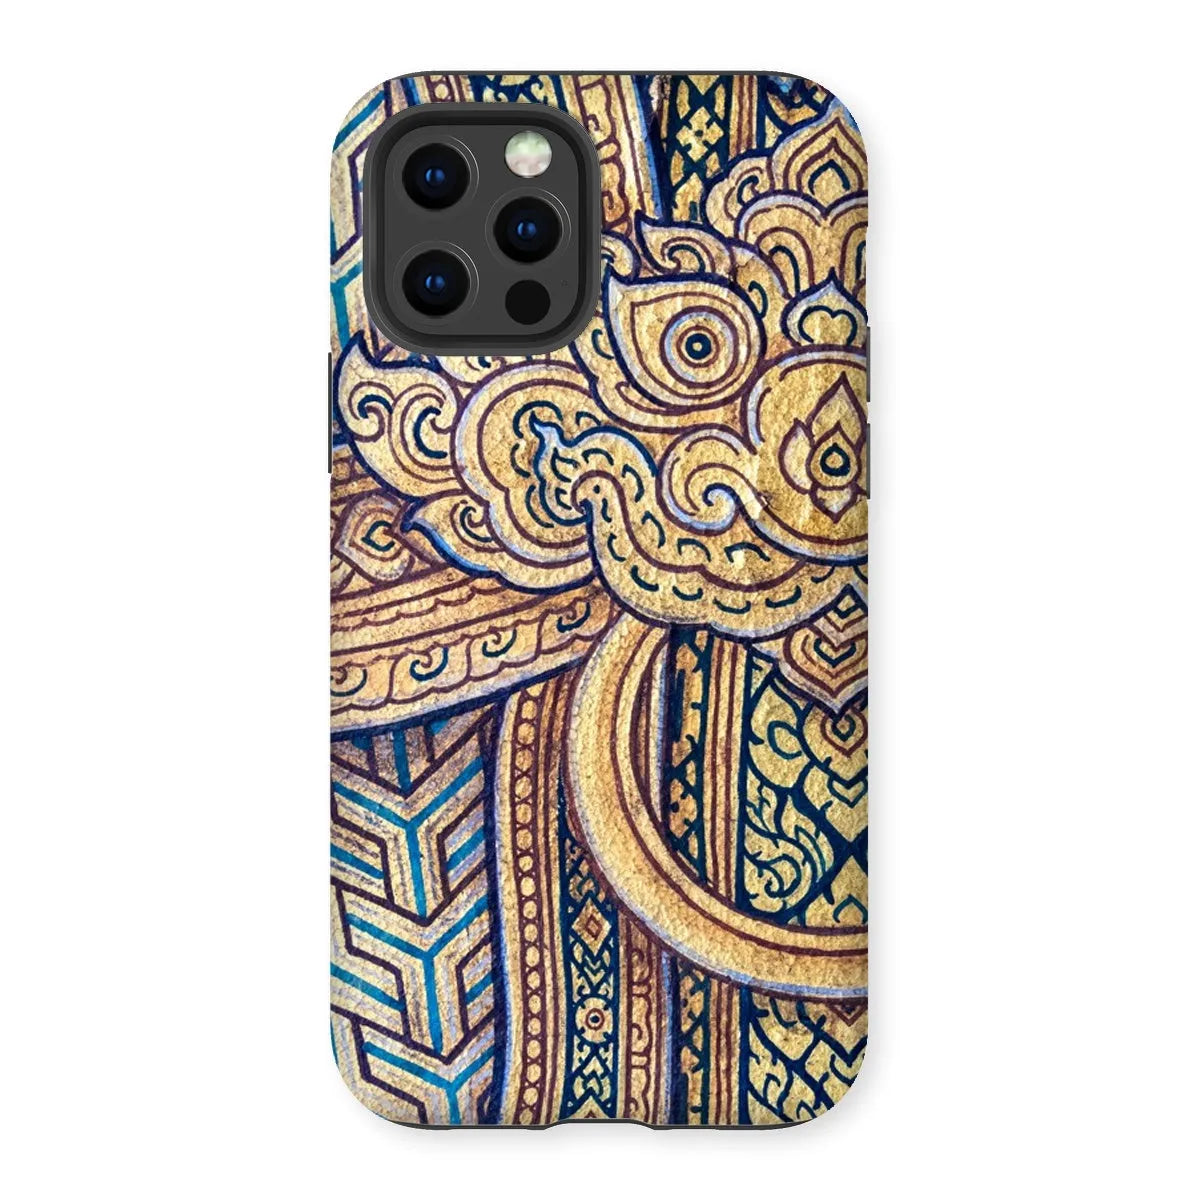 Man’s Best Friend - Thai Aesthetic Art Phone Case - Iphone 12 Pro / Matte - Mobile Phone Cases - Aesthetic Art